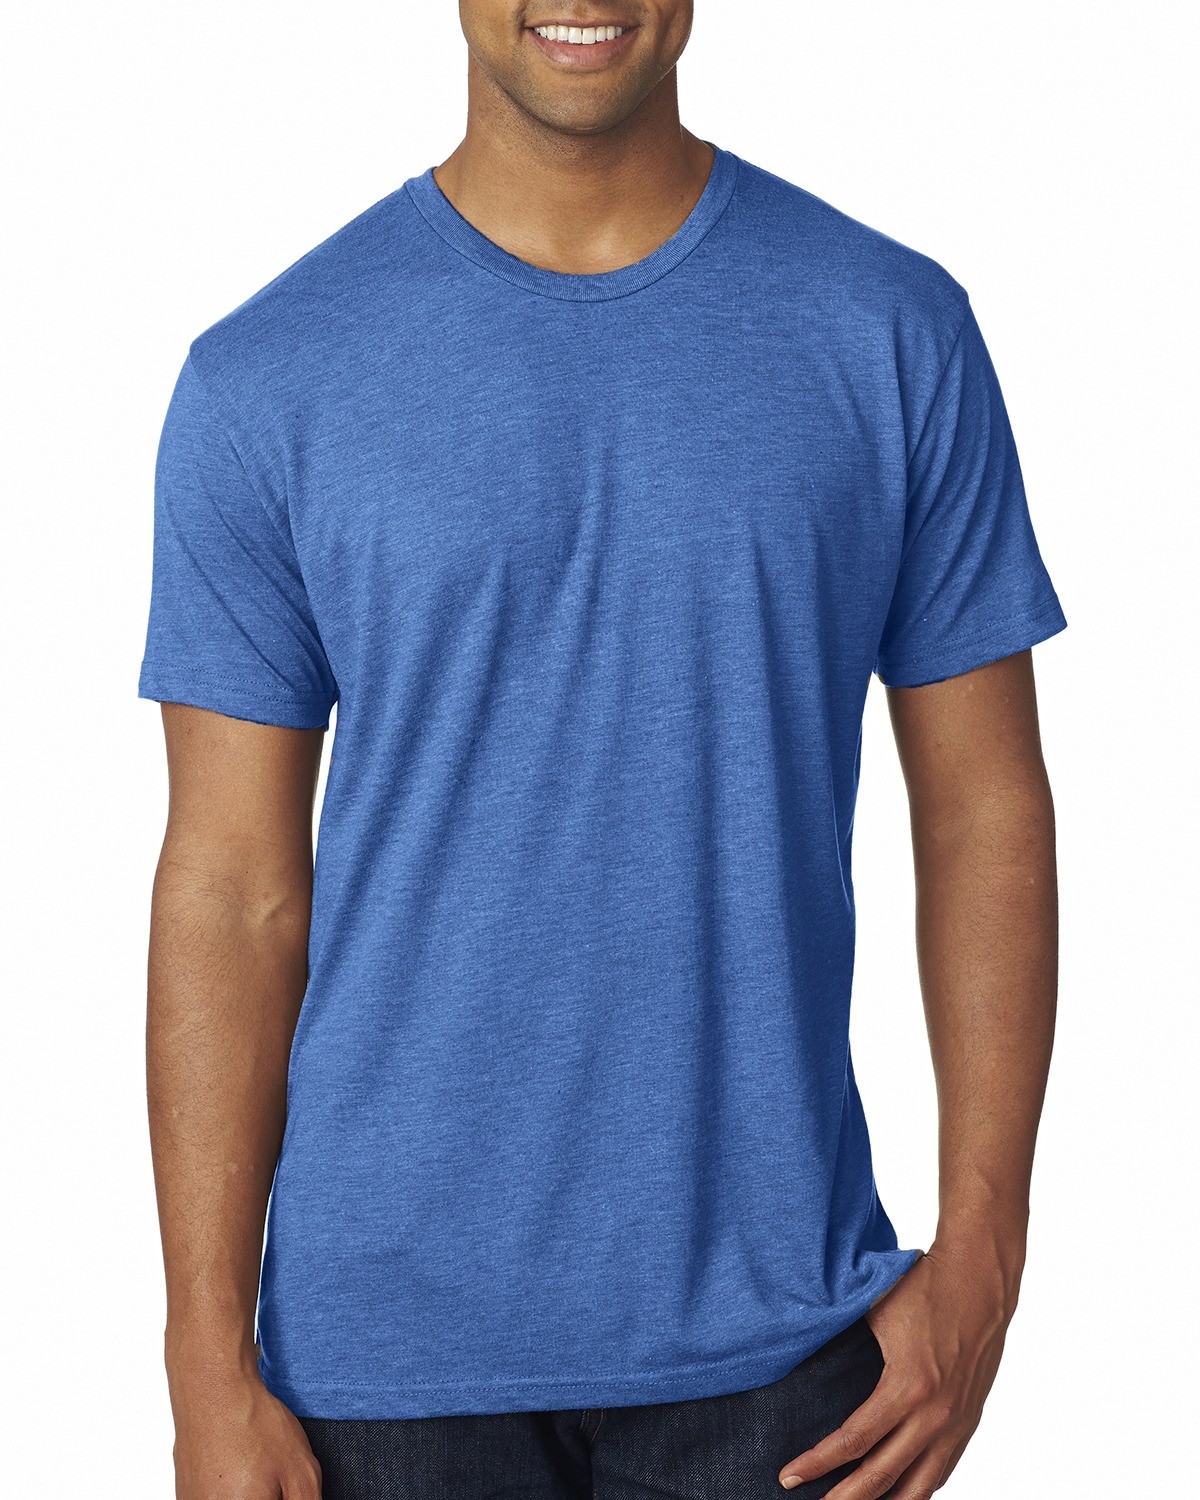 Next Level 6010A Men's Made In Usa Triblend T-Shirt